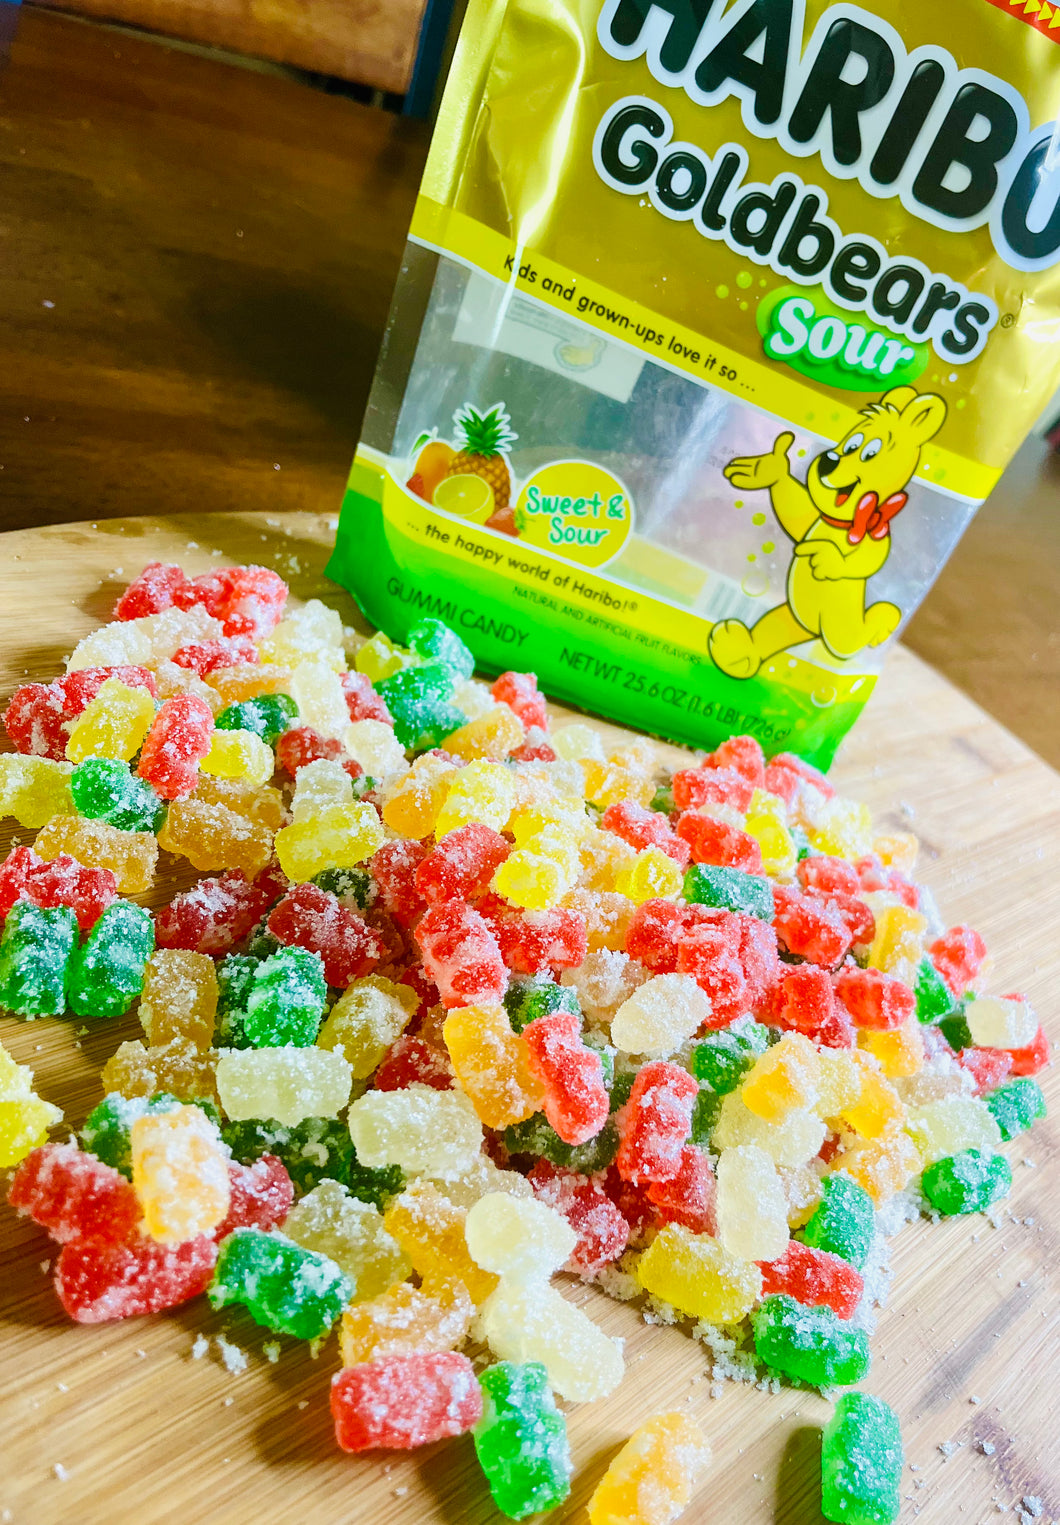 Haribo sour gummy bears